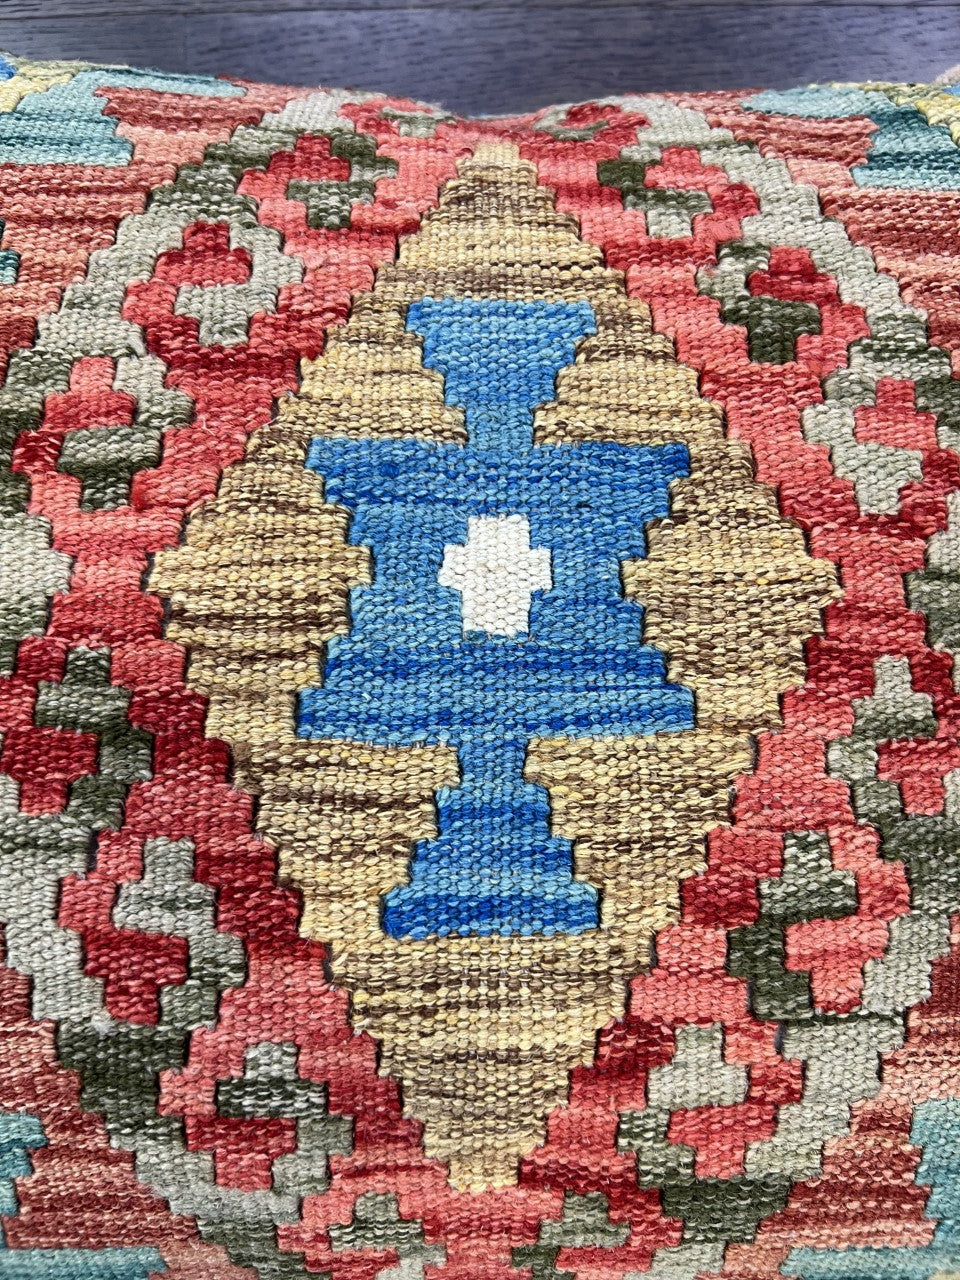 Beautiful Afghan Kilim new decorative cushion - Hakiemie Rug Gallery